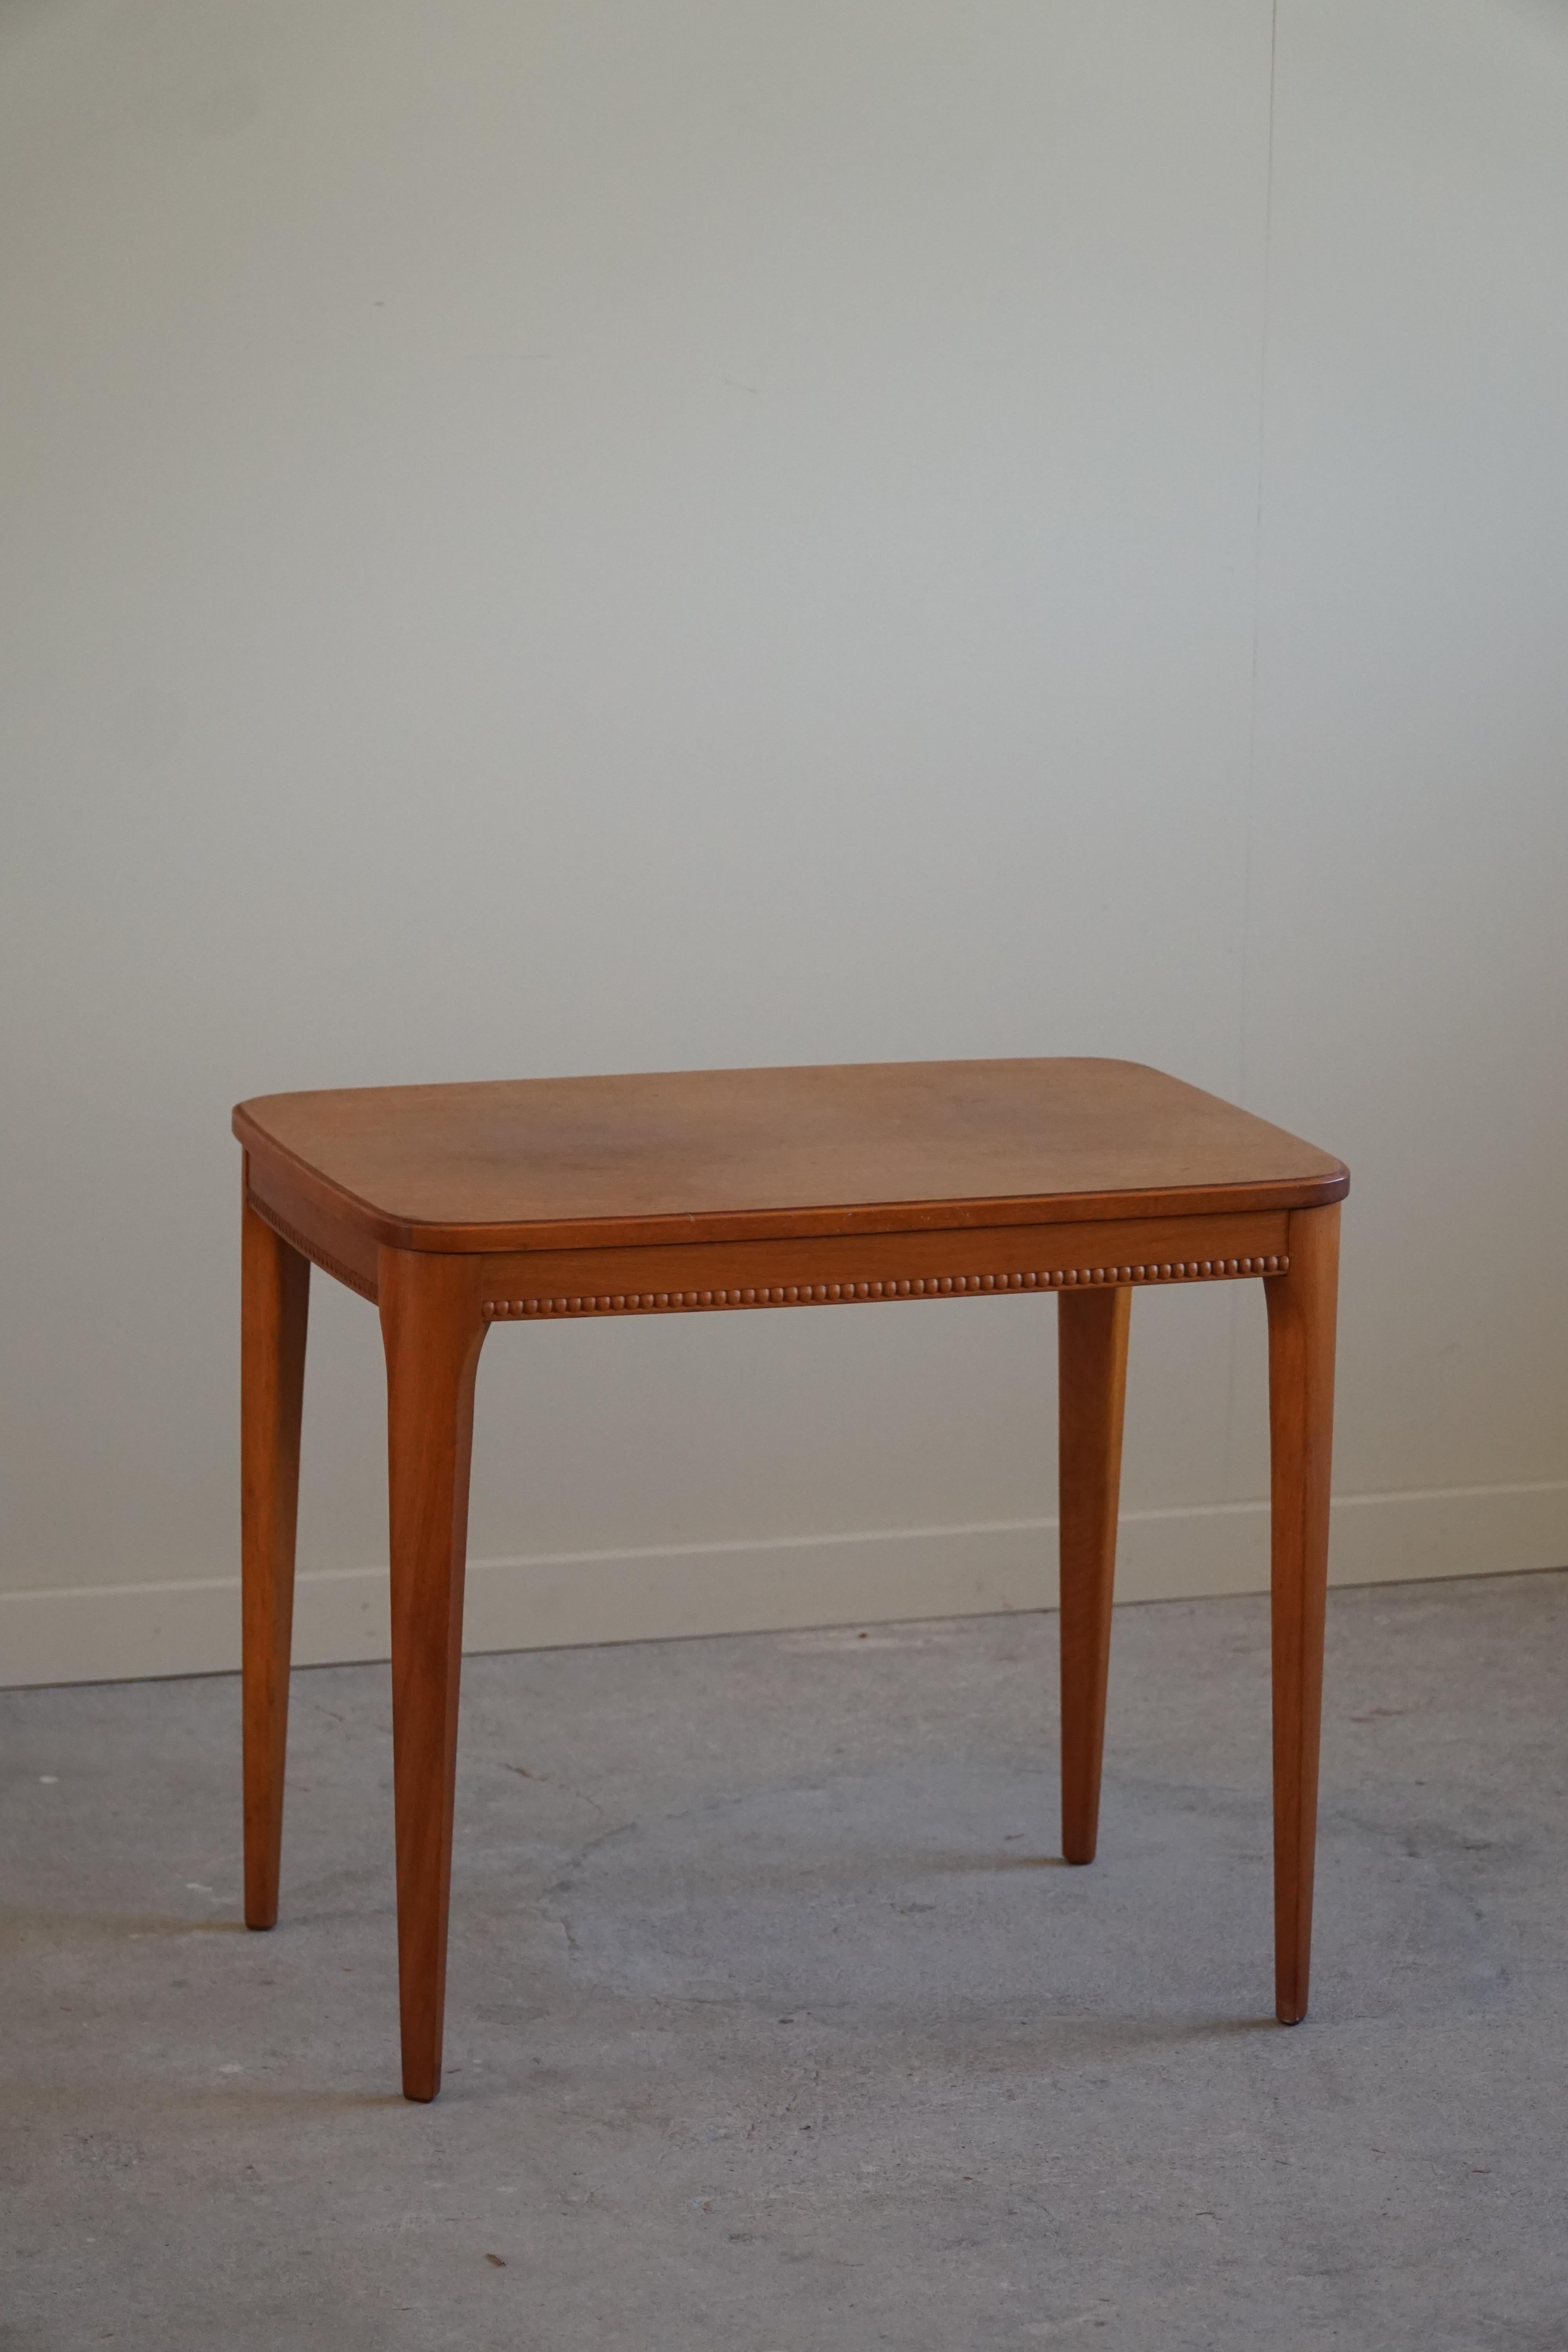 20th Century Side Table in Teak, Danish Mid Century Modern, 1950s  For Sale